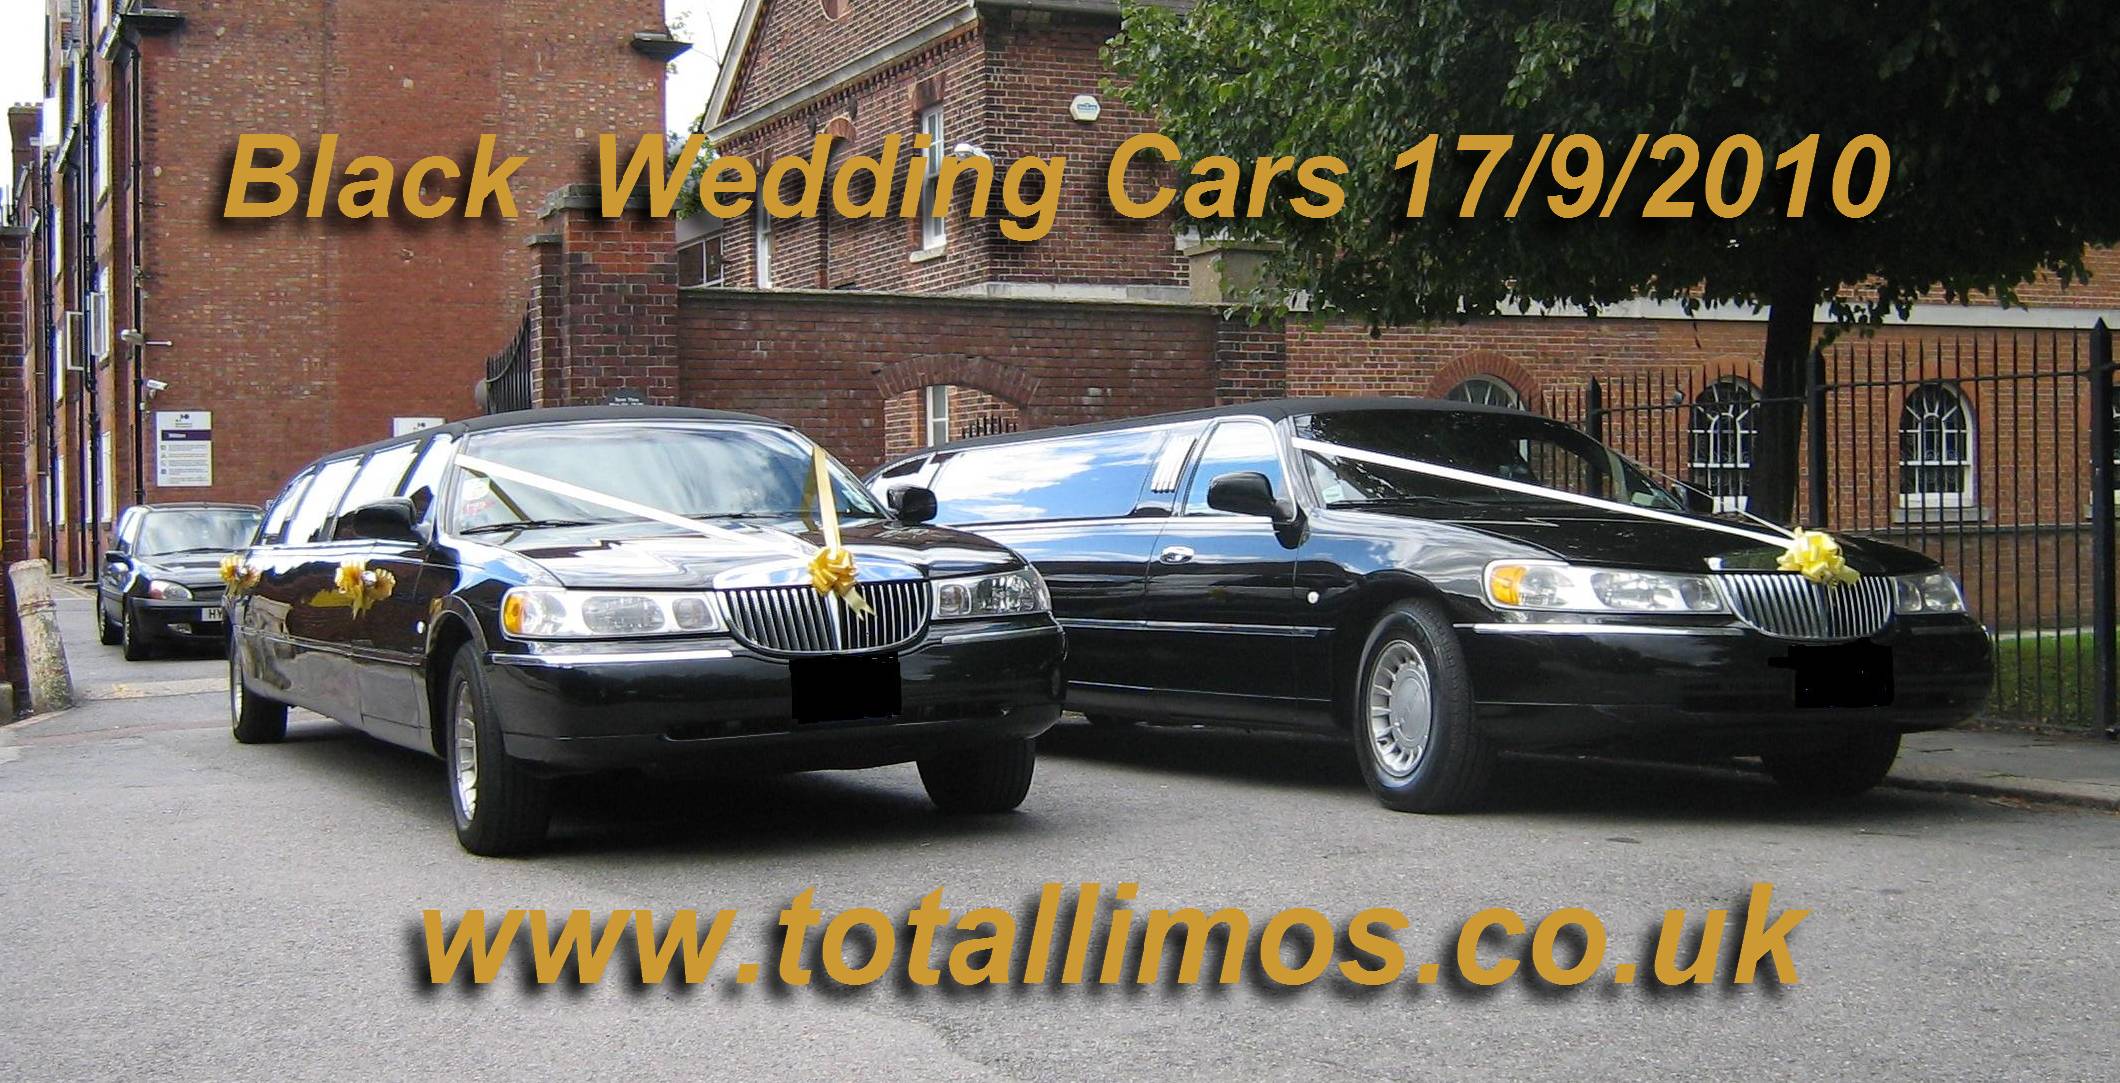 webassets/Black-wedding-cars.jpg